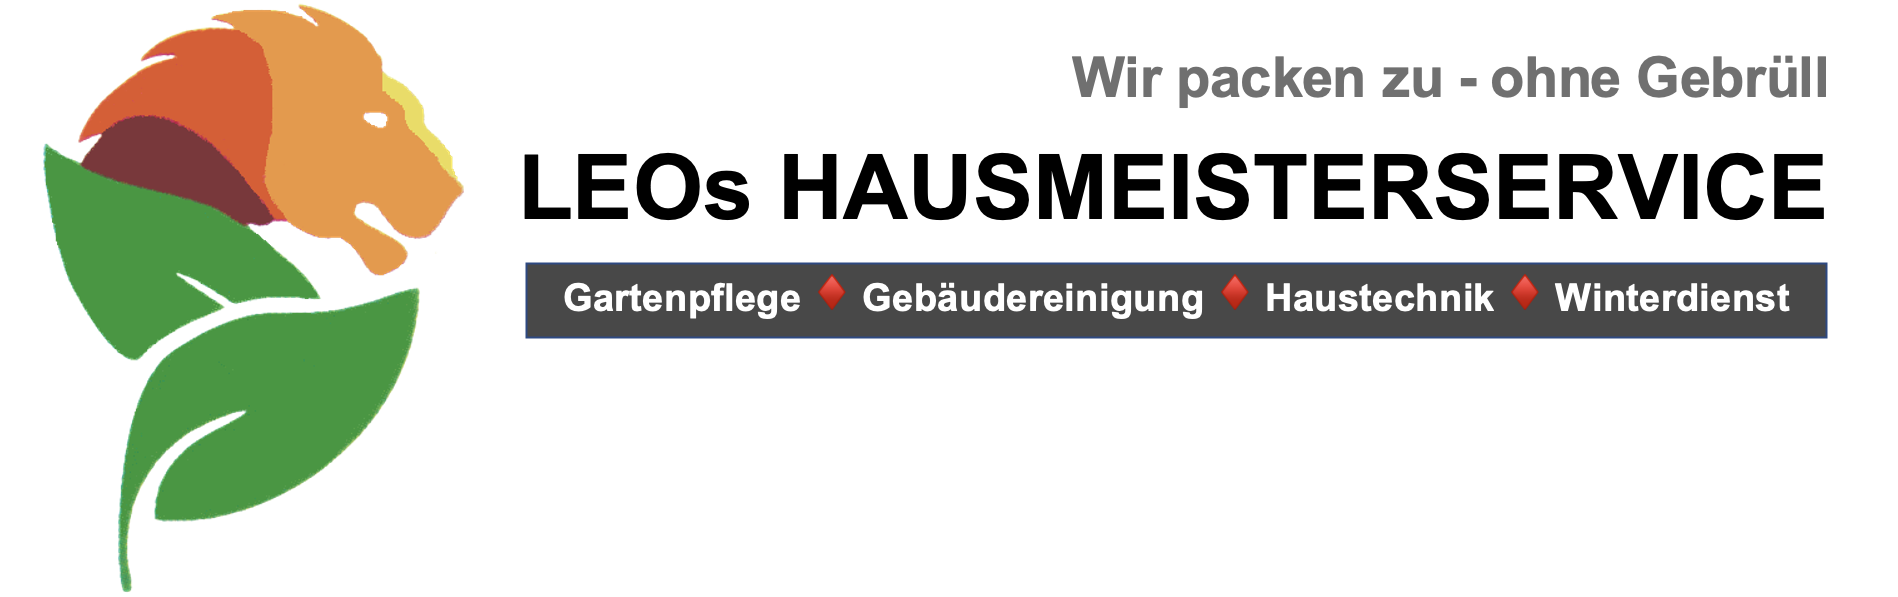 www.leos-hausmeisterservice.de